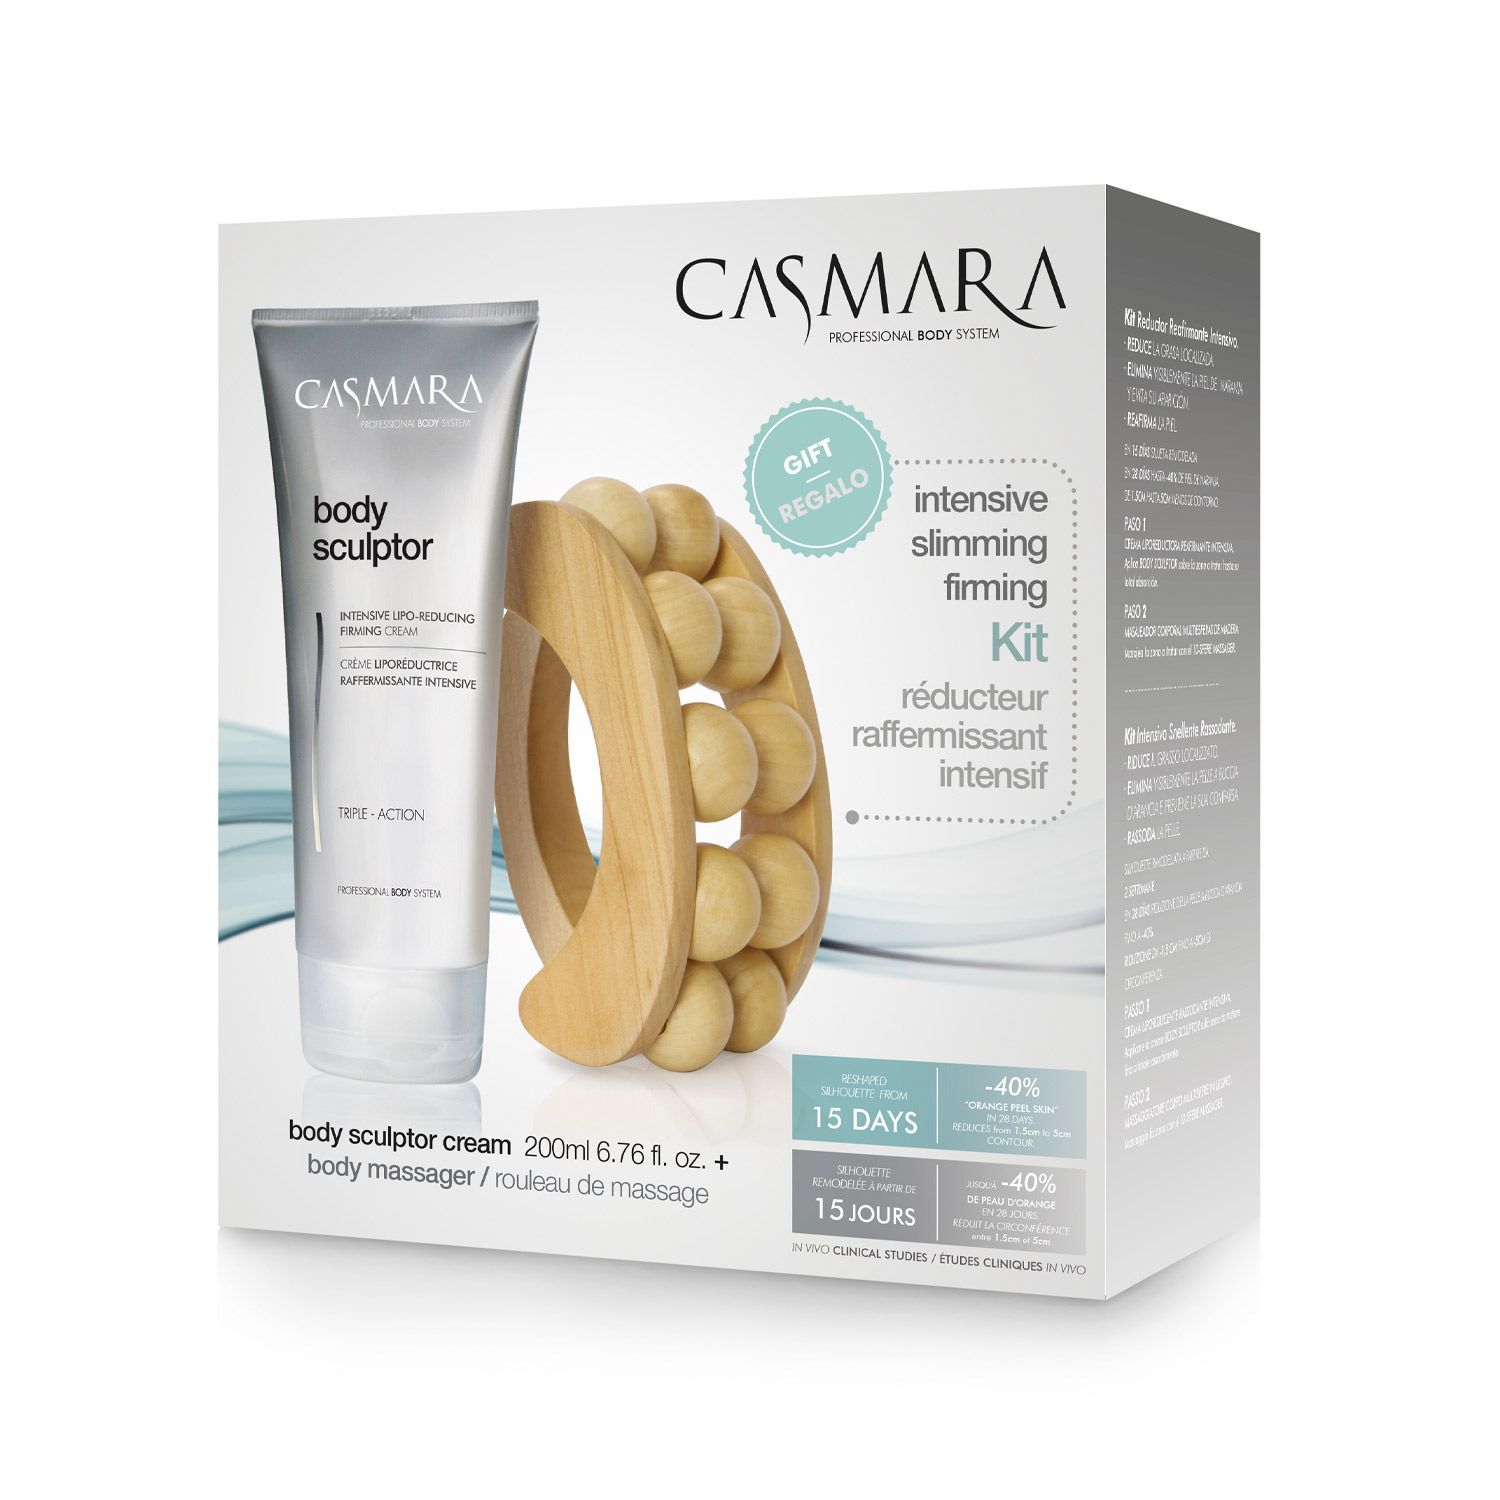 CASMARA Intensive Slimming-firming kit intensyvus lieknėjimą skatinantis rinkinys